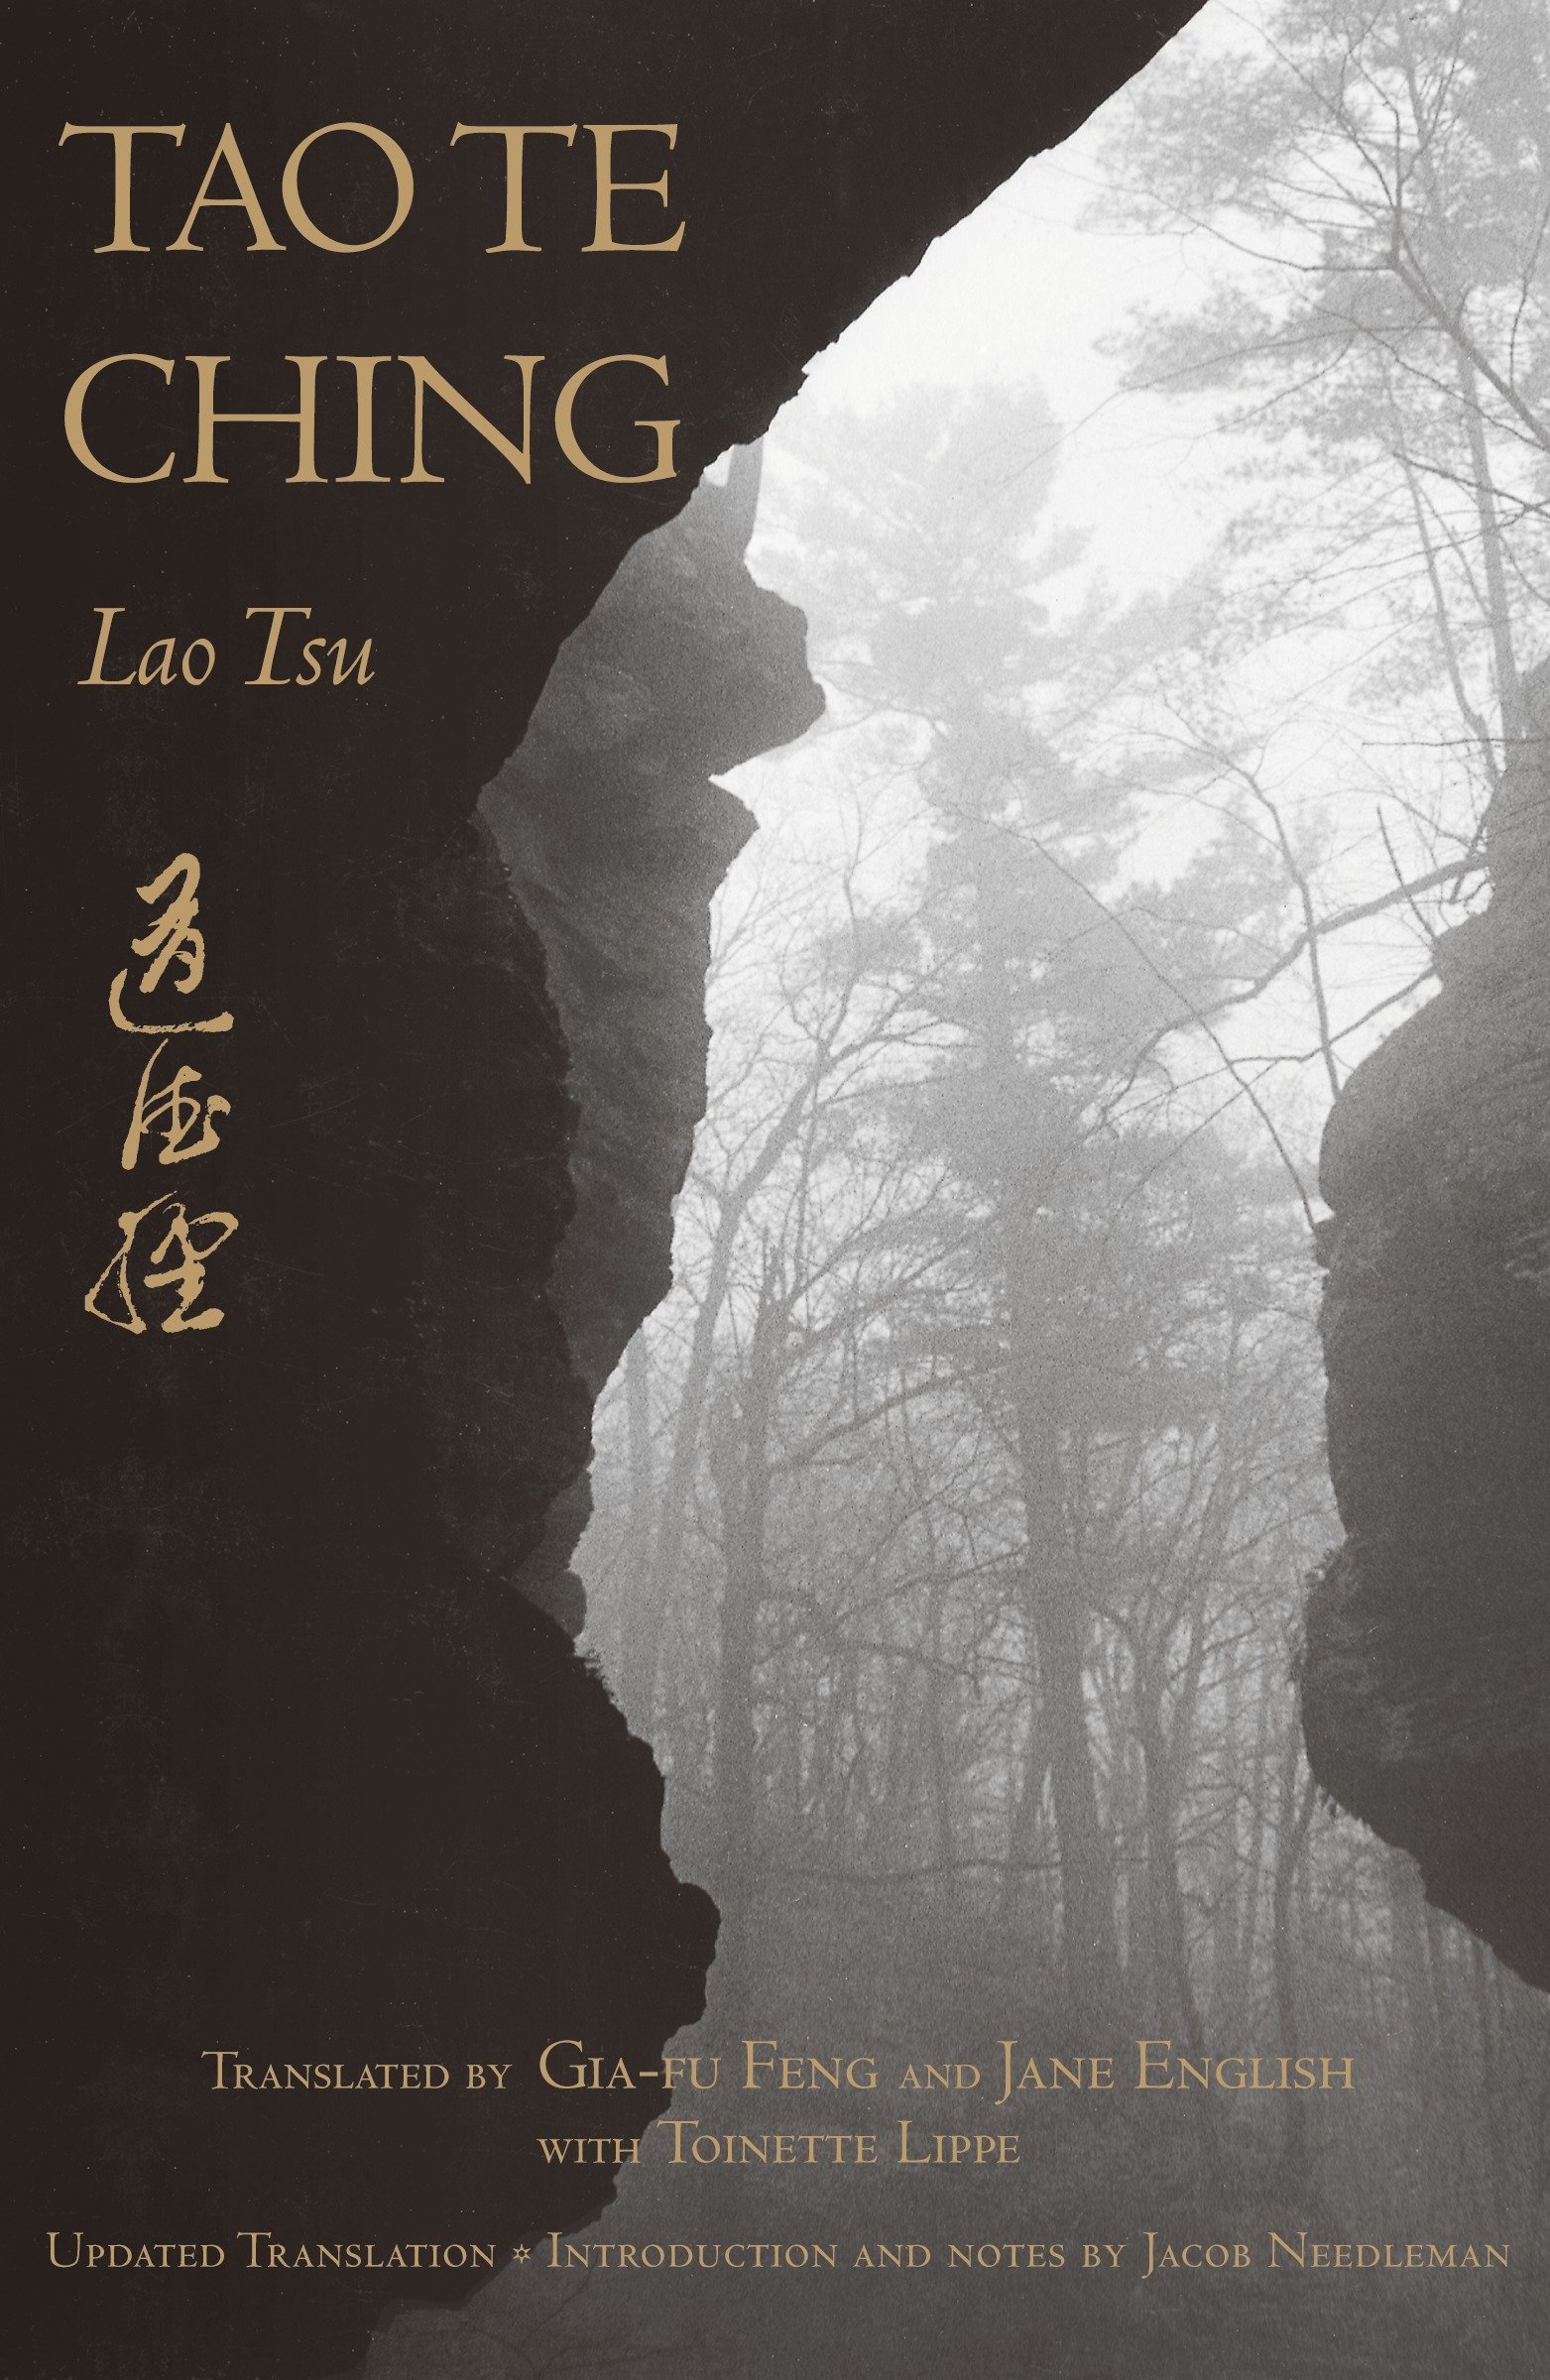 Laozi, Gia-Fu Feng, Jane English, Toinette Lippe, Jacob Needleman: Tao Te Ching (Paperback, 1989, Vintage)